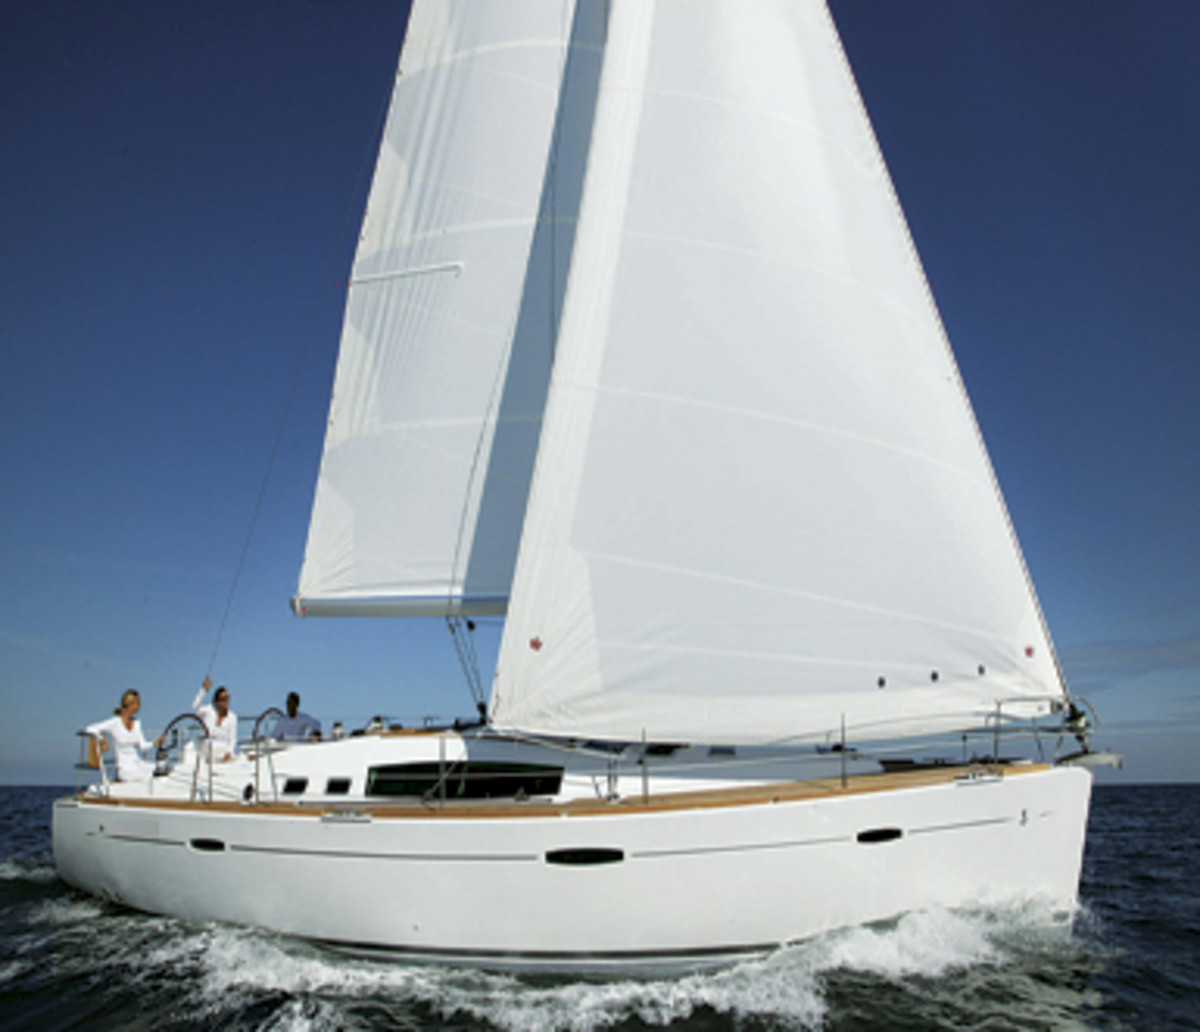 46 ft beneteau sailboat